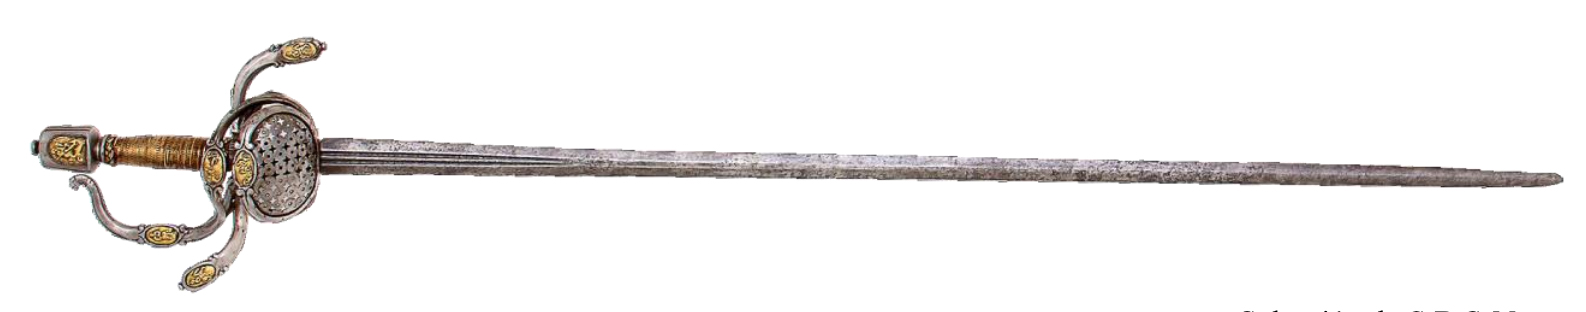 Espada de Lazo y Concha, Sebastián Hernández (siglo XVII)